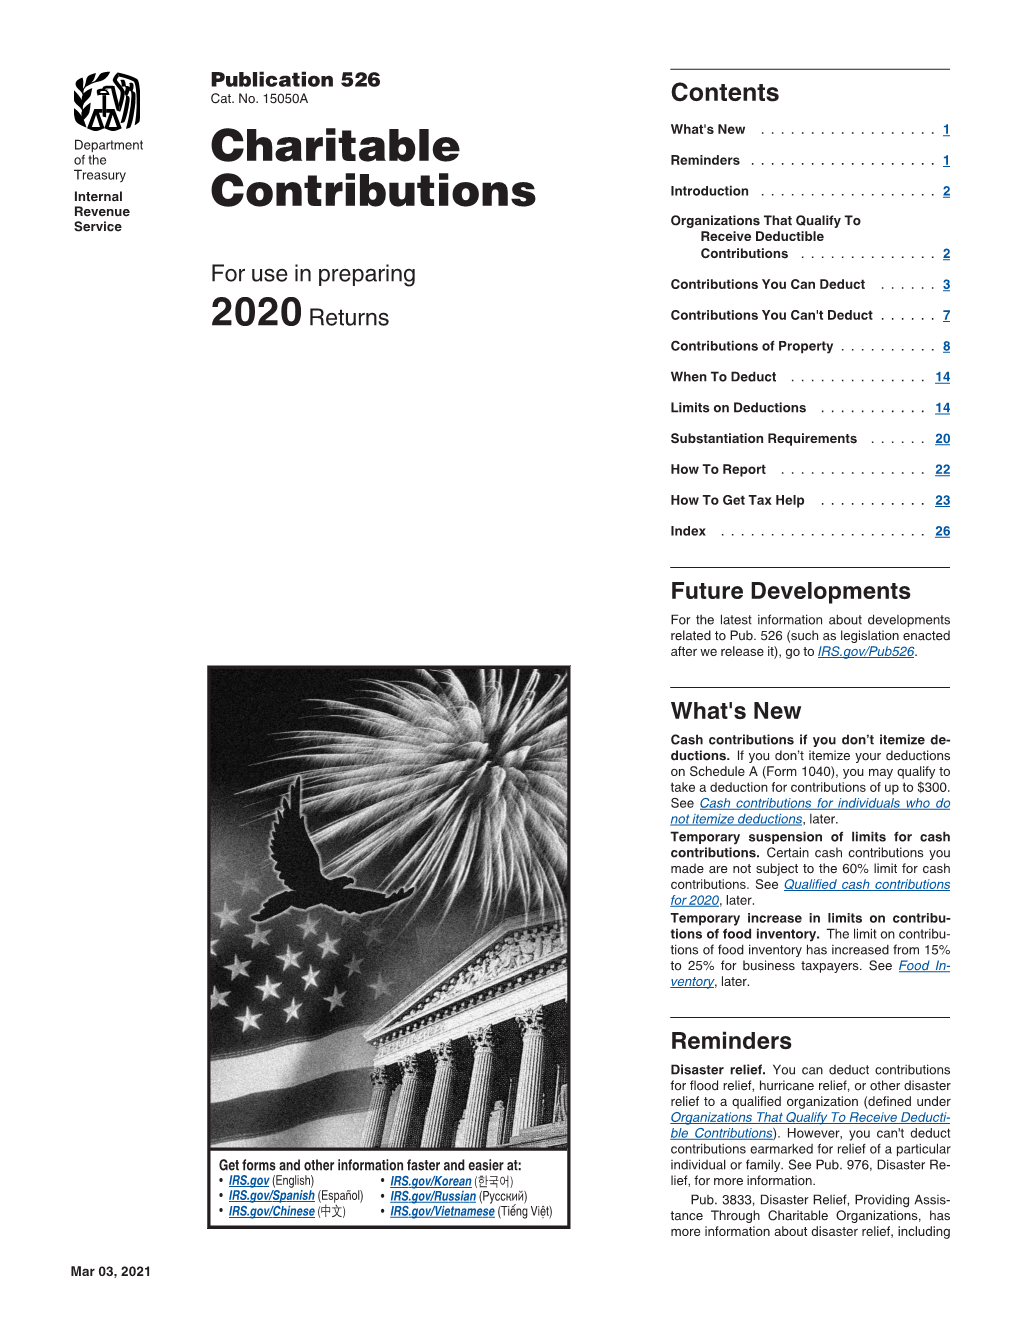 Publication 526, Charitable Contributions